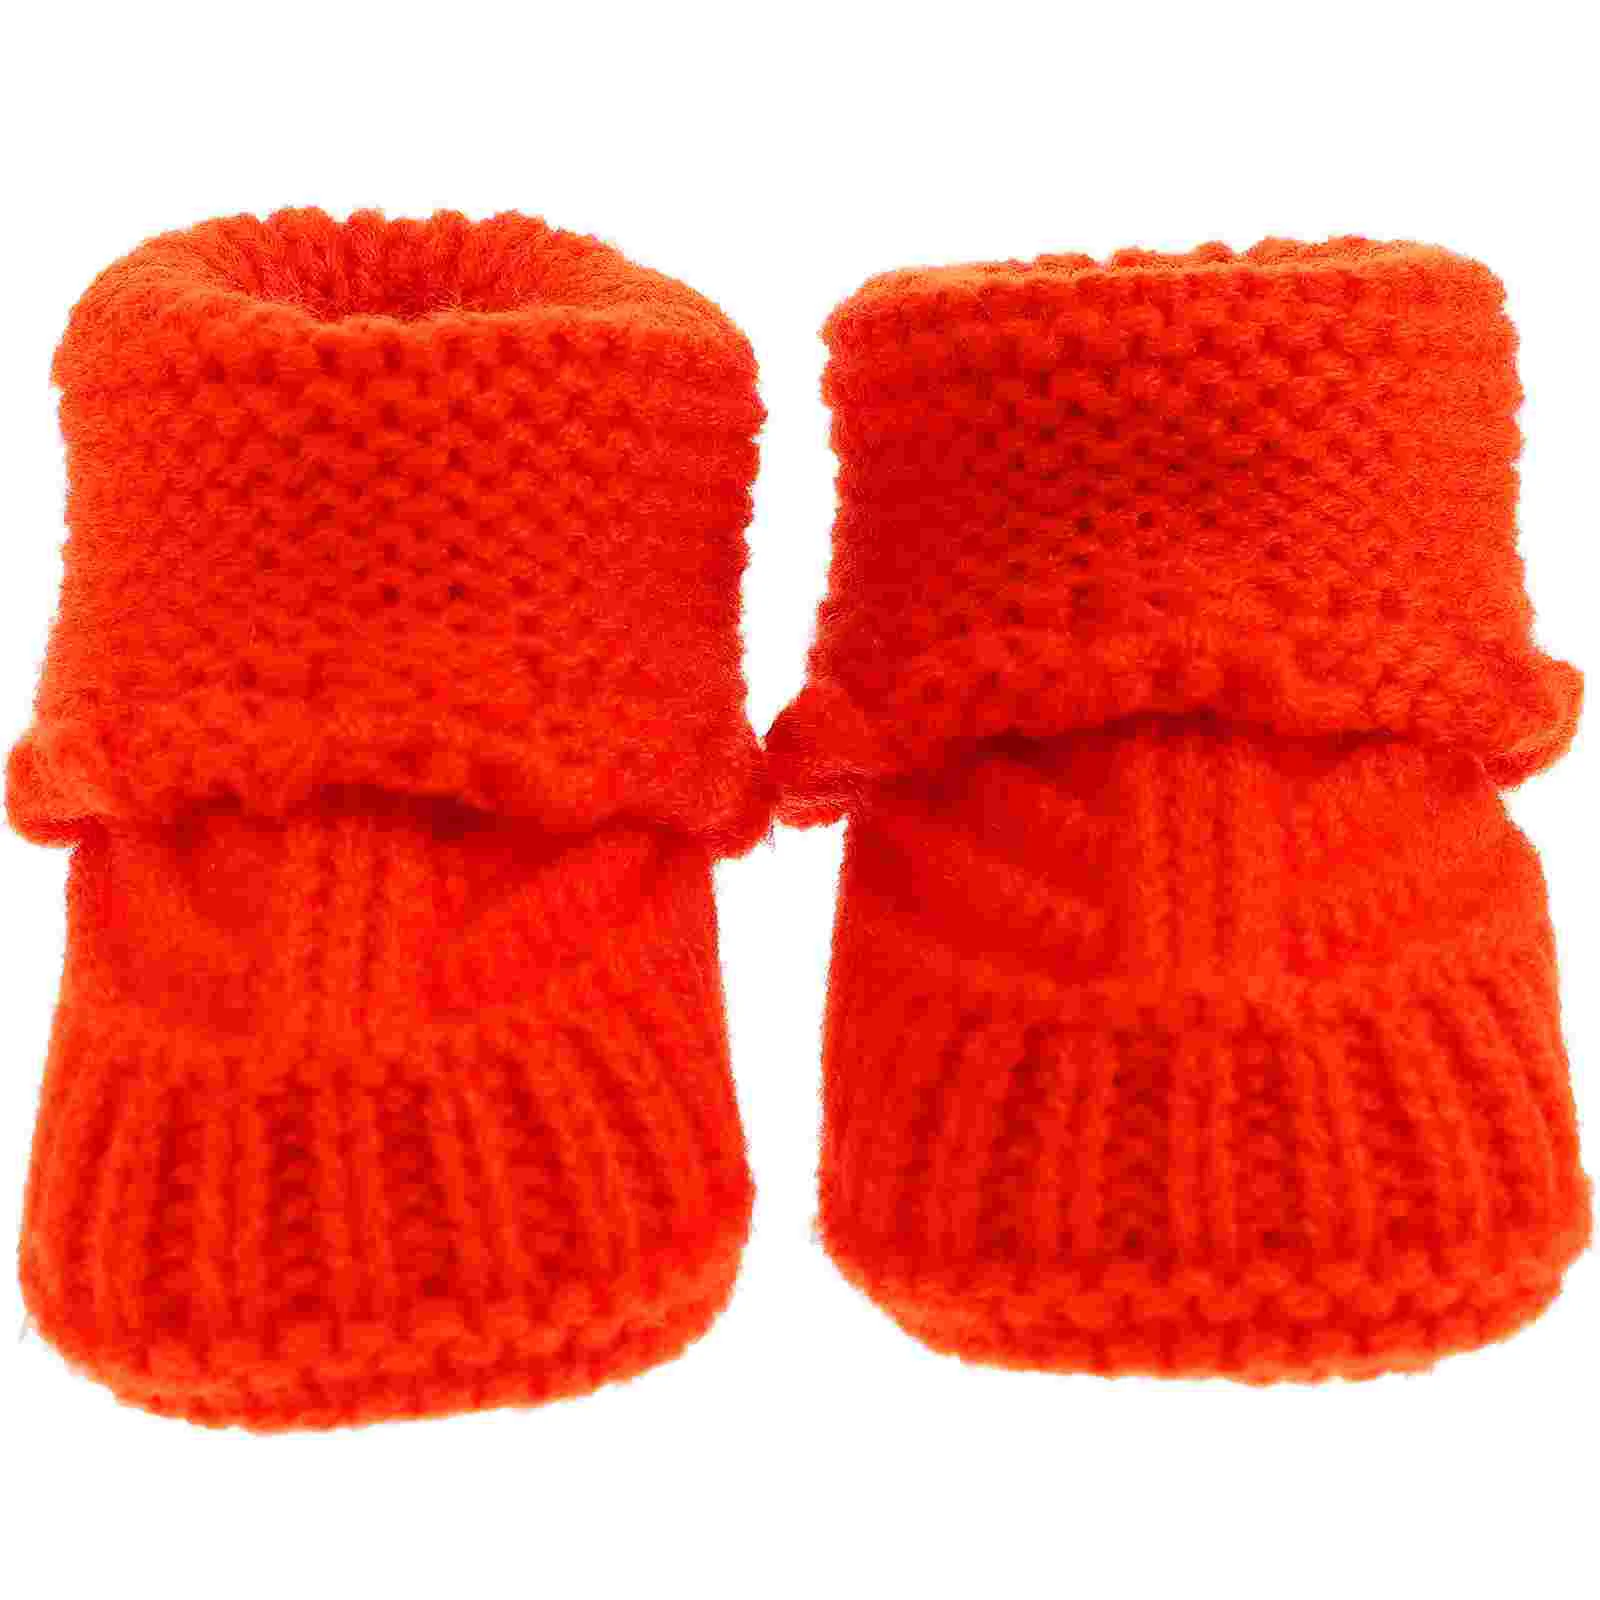 

1 Pair Baby Knitting Shoes Woolen Yarn Handmade Crochet Booties Infant Crochet Shoes